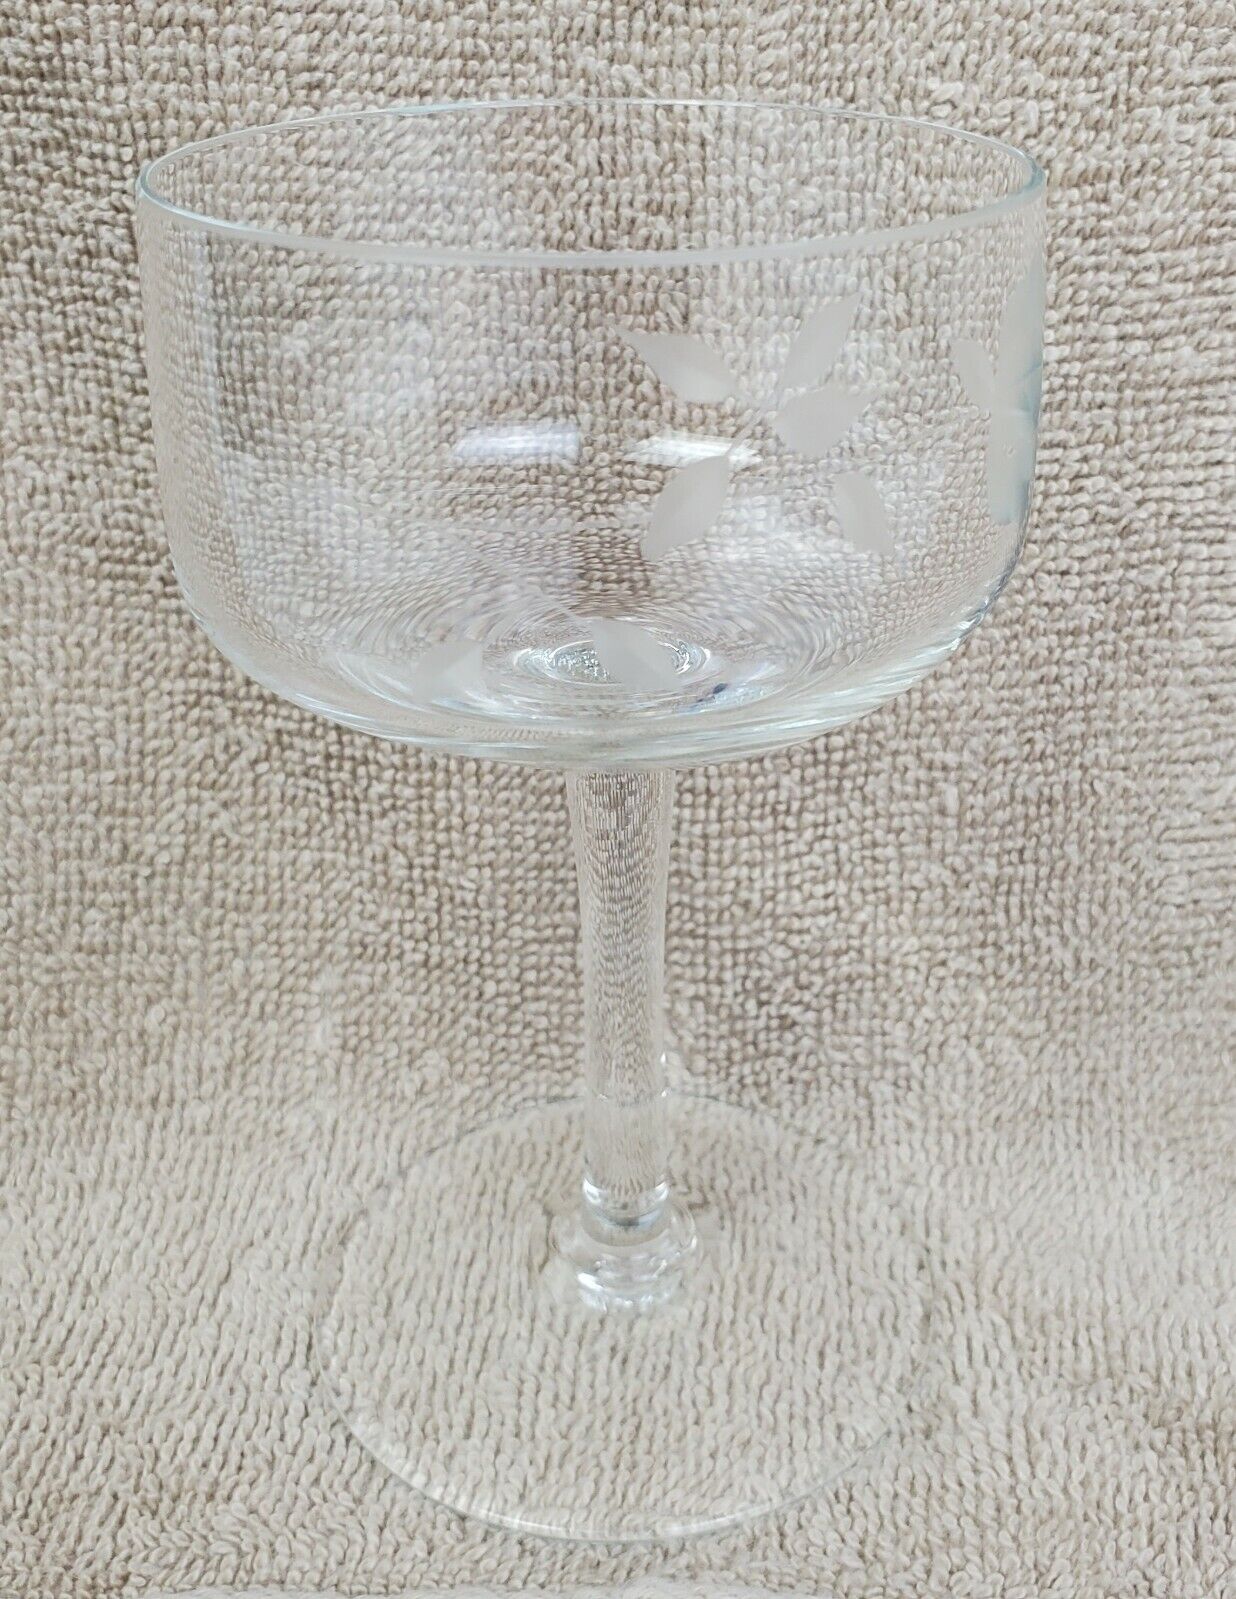 Vintage Crystal Etched Flower Small Wine Glasses - Set of 12